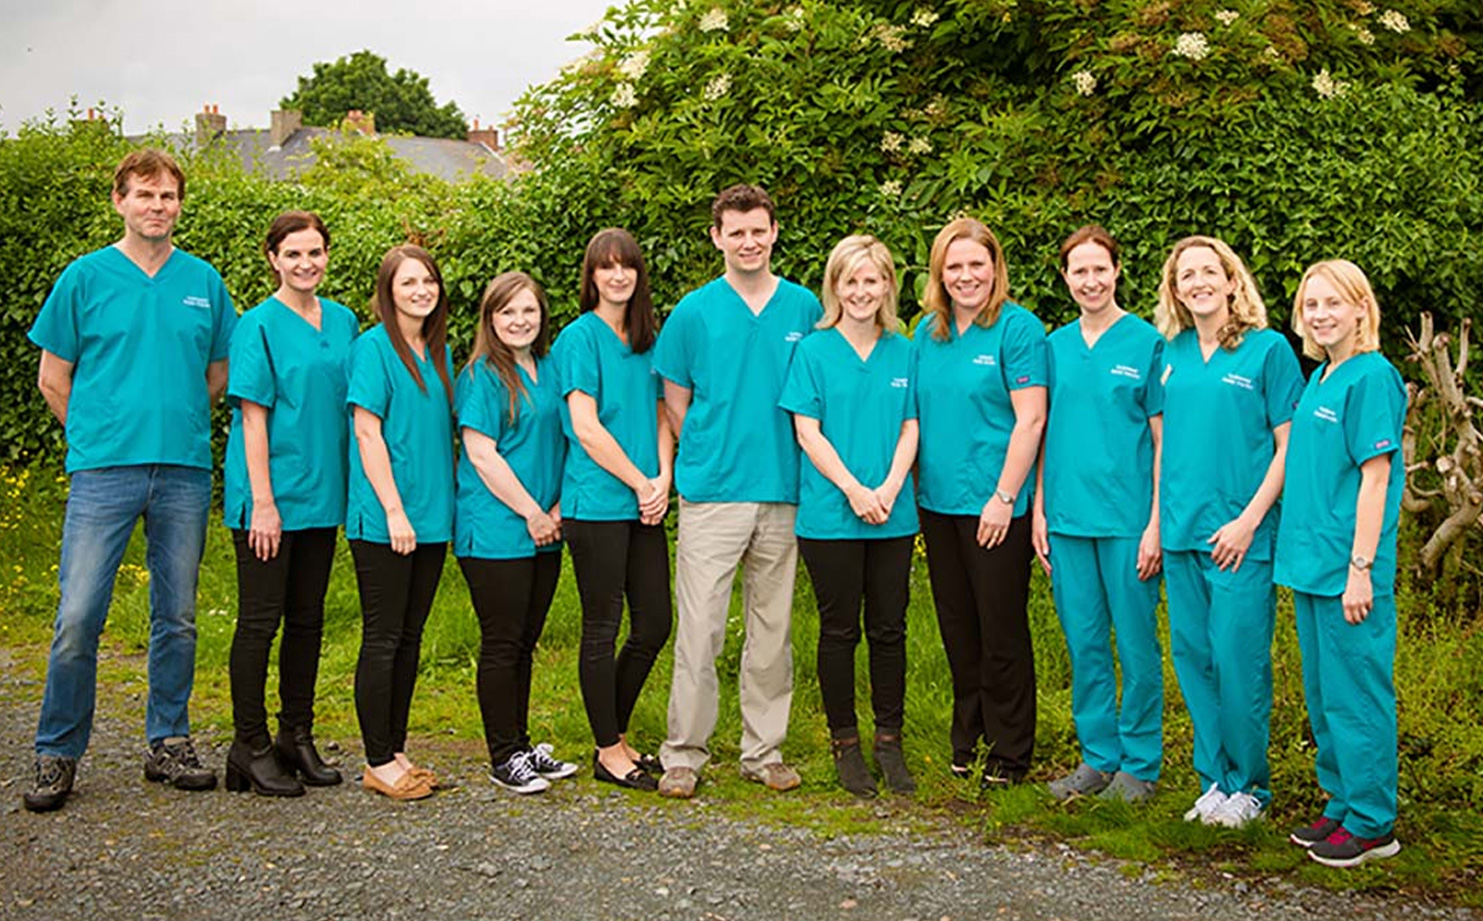 Castlebawn Dental Practice Bangor and Newtownards